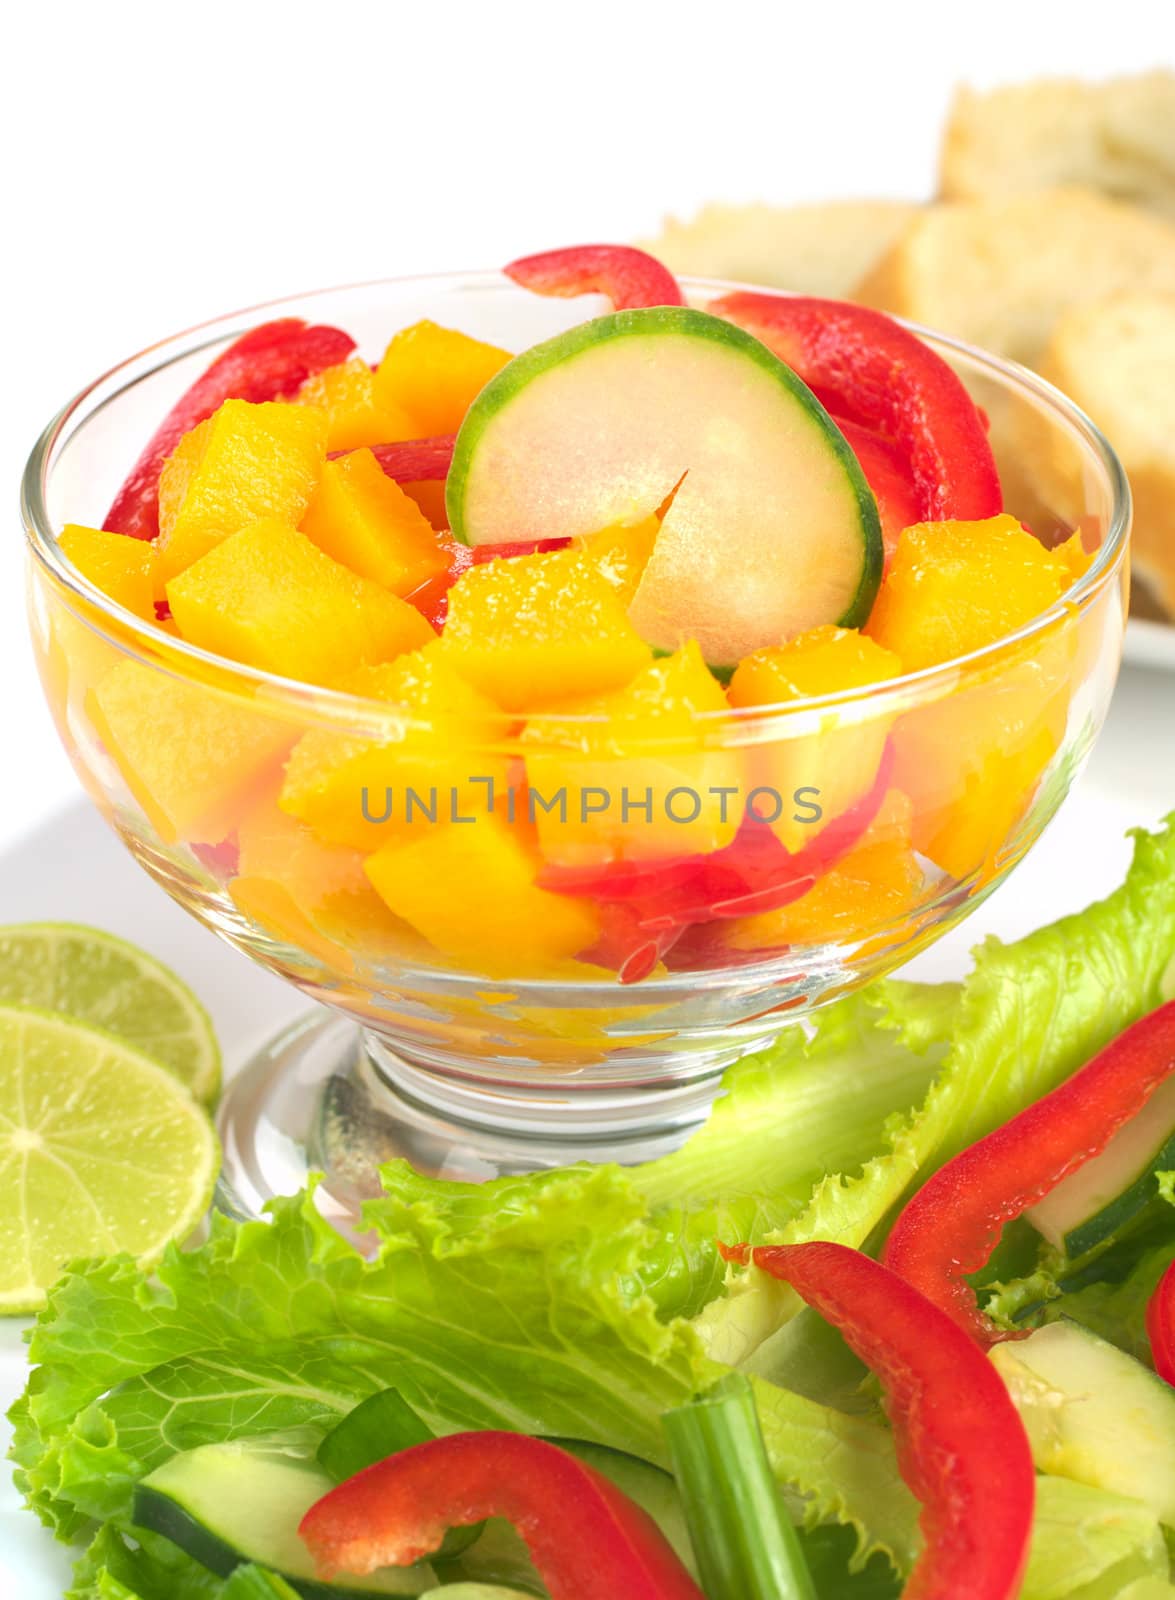 Mango, Bell Pepper and Cucumber by ildi